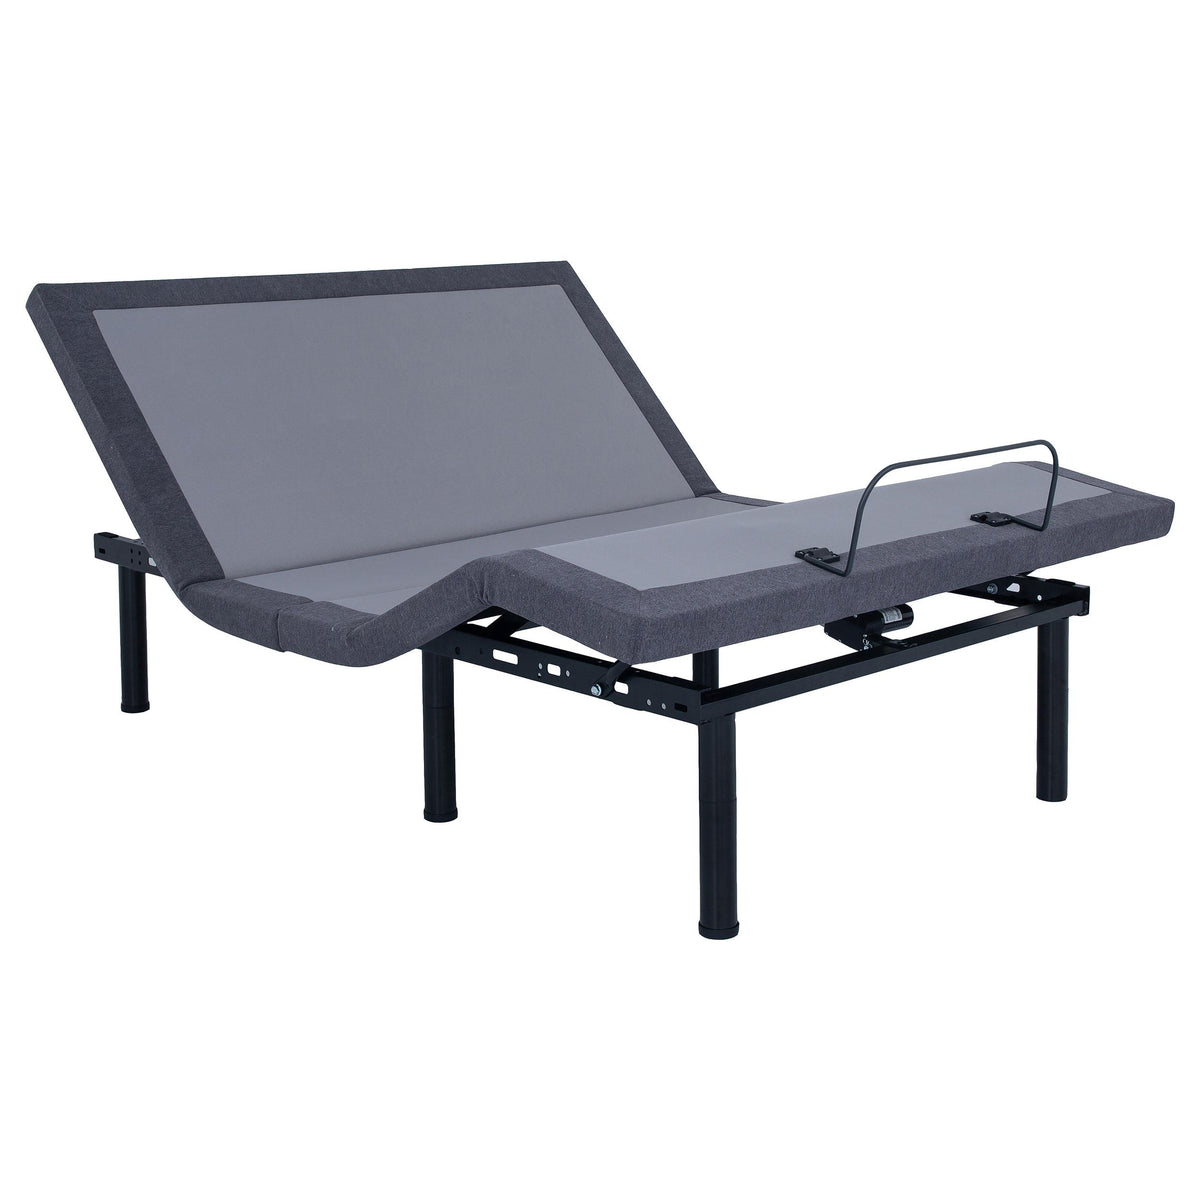 Negan Full Adjustable Bed Base Grey and Black Negan Full Adjustable Bed Base Grey and Black Half Price Furniture